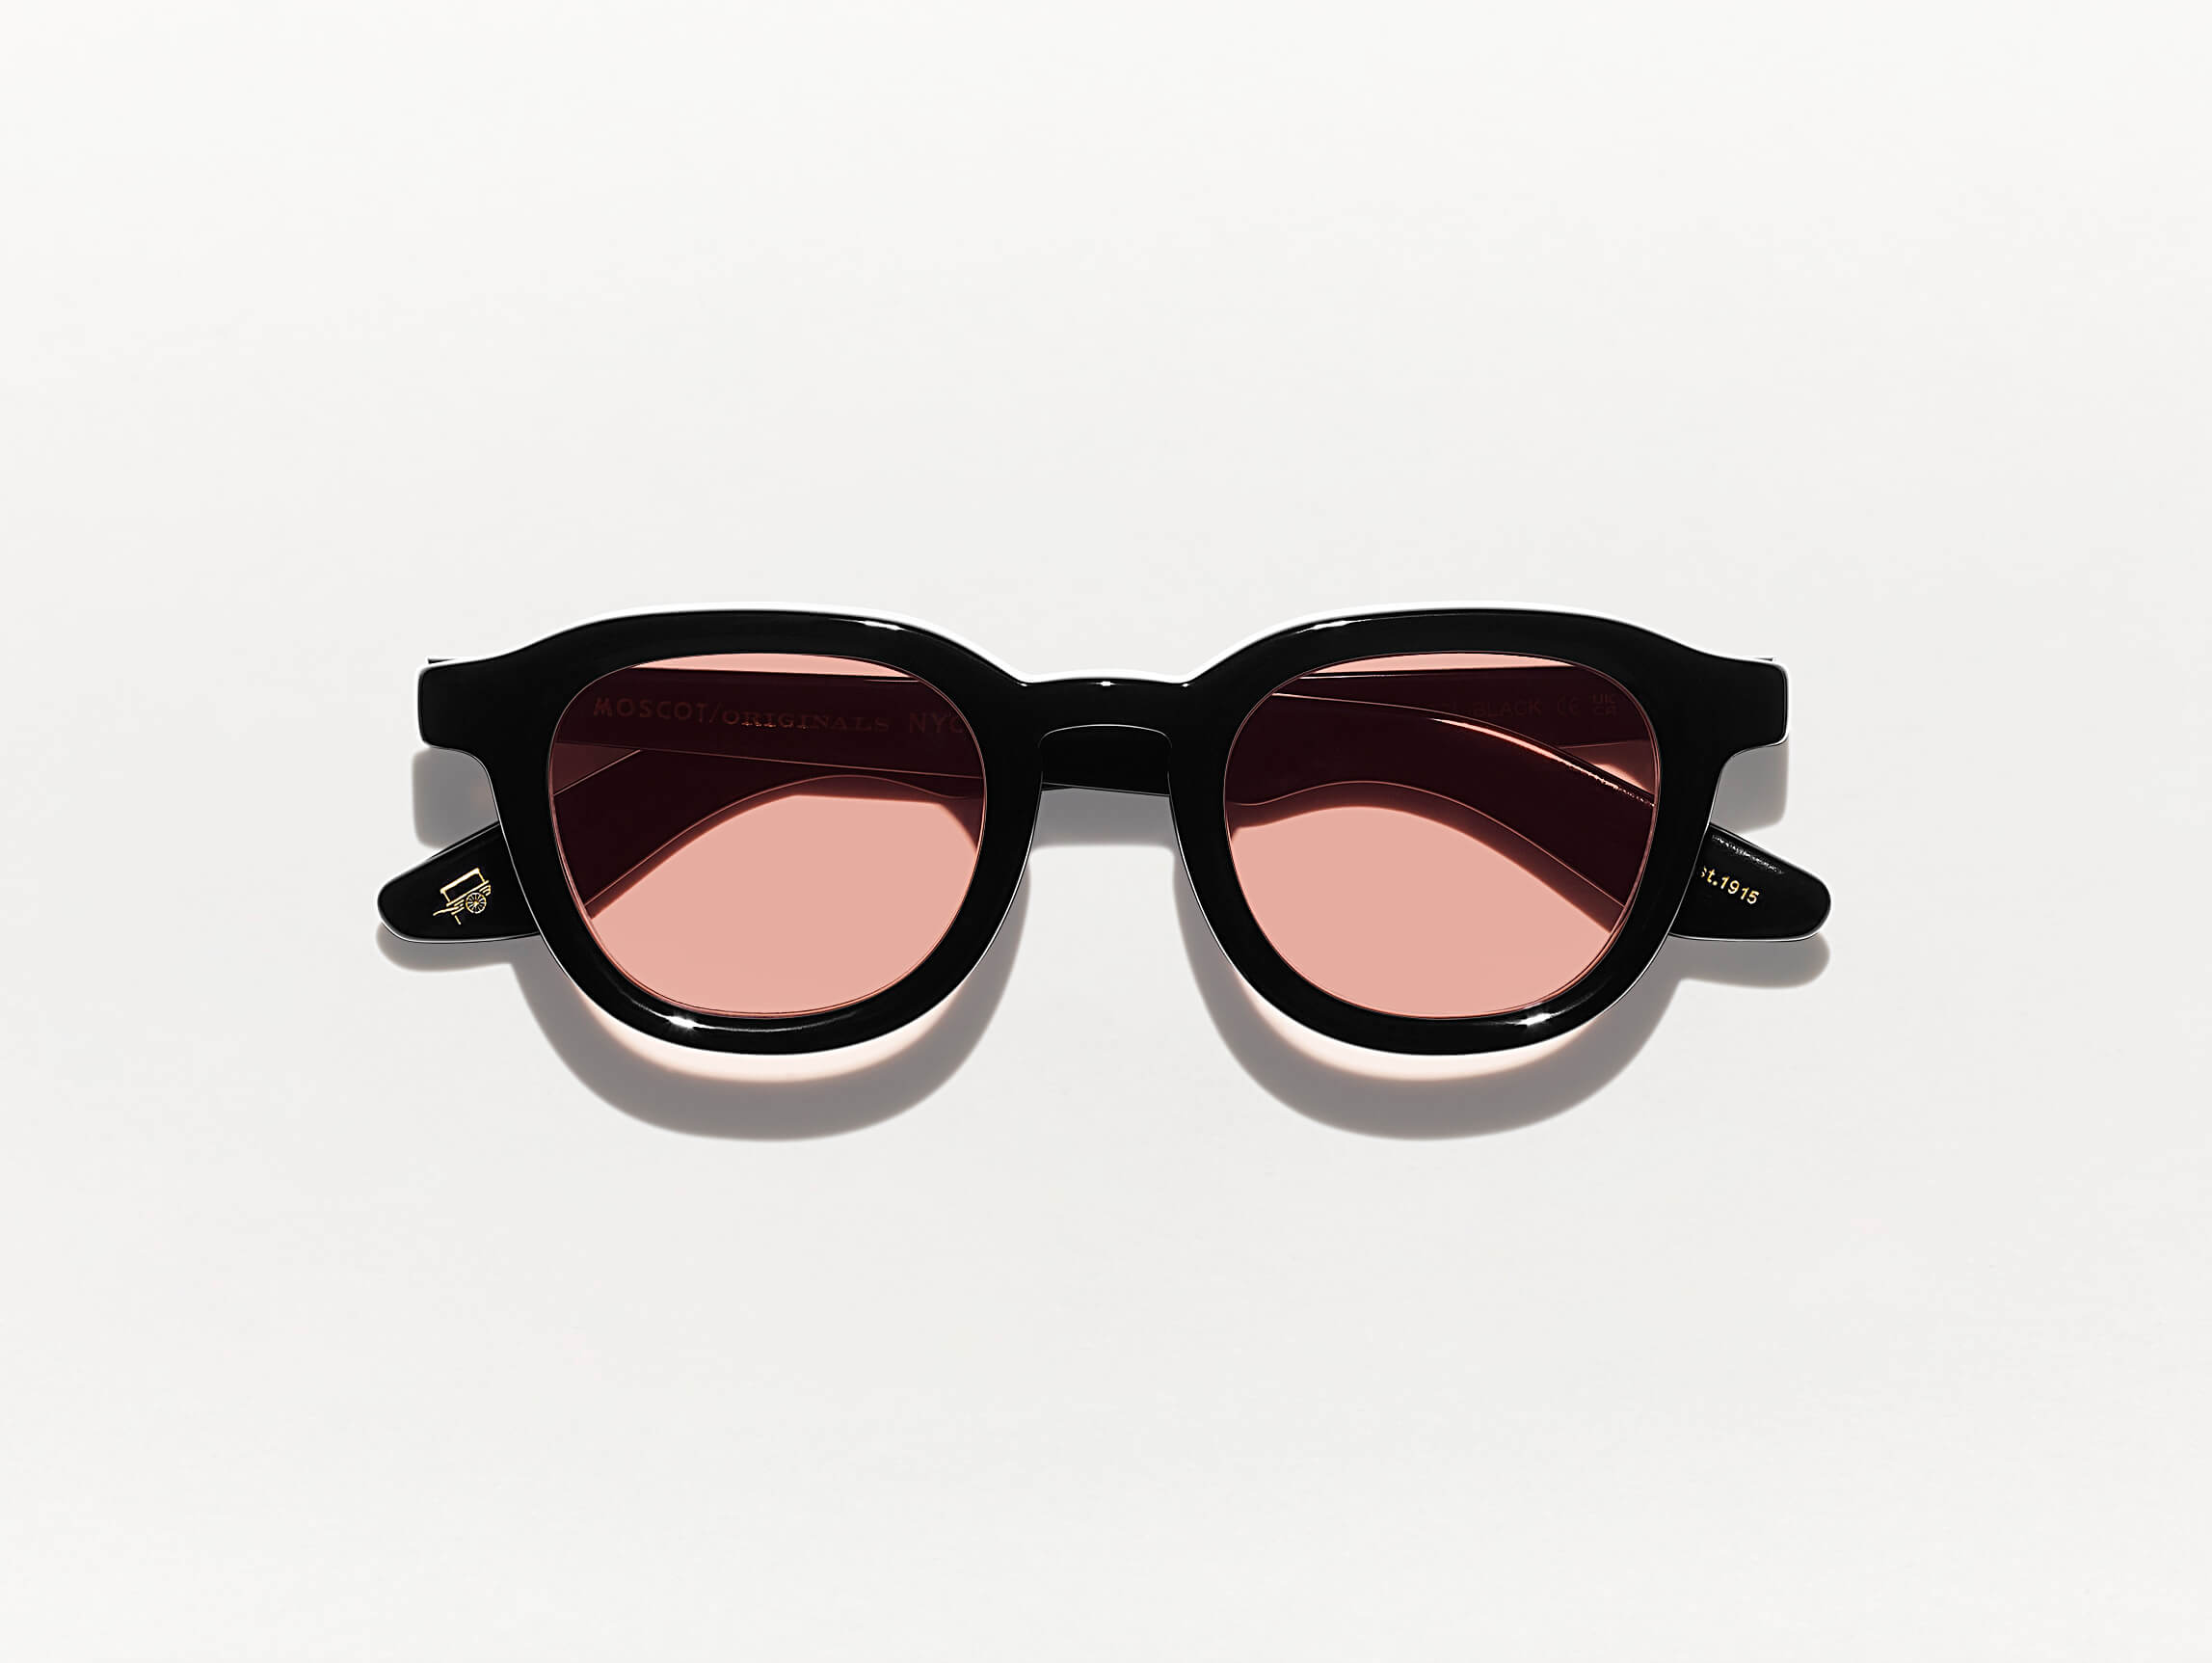 ORIGINALS Sunglasses | NYC Frames & Styles